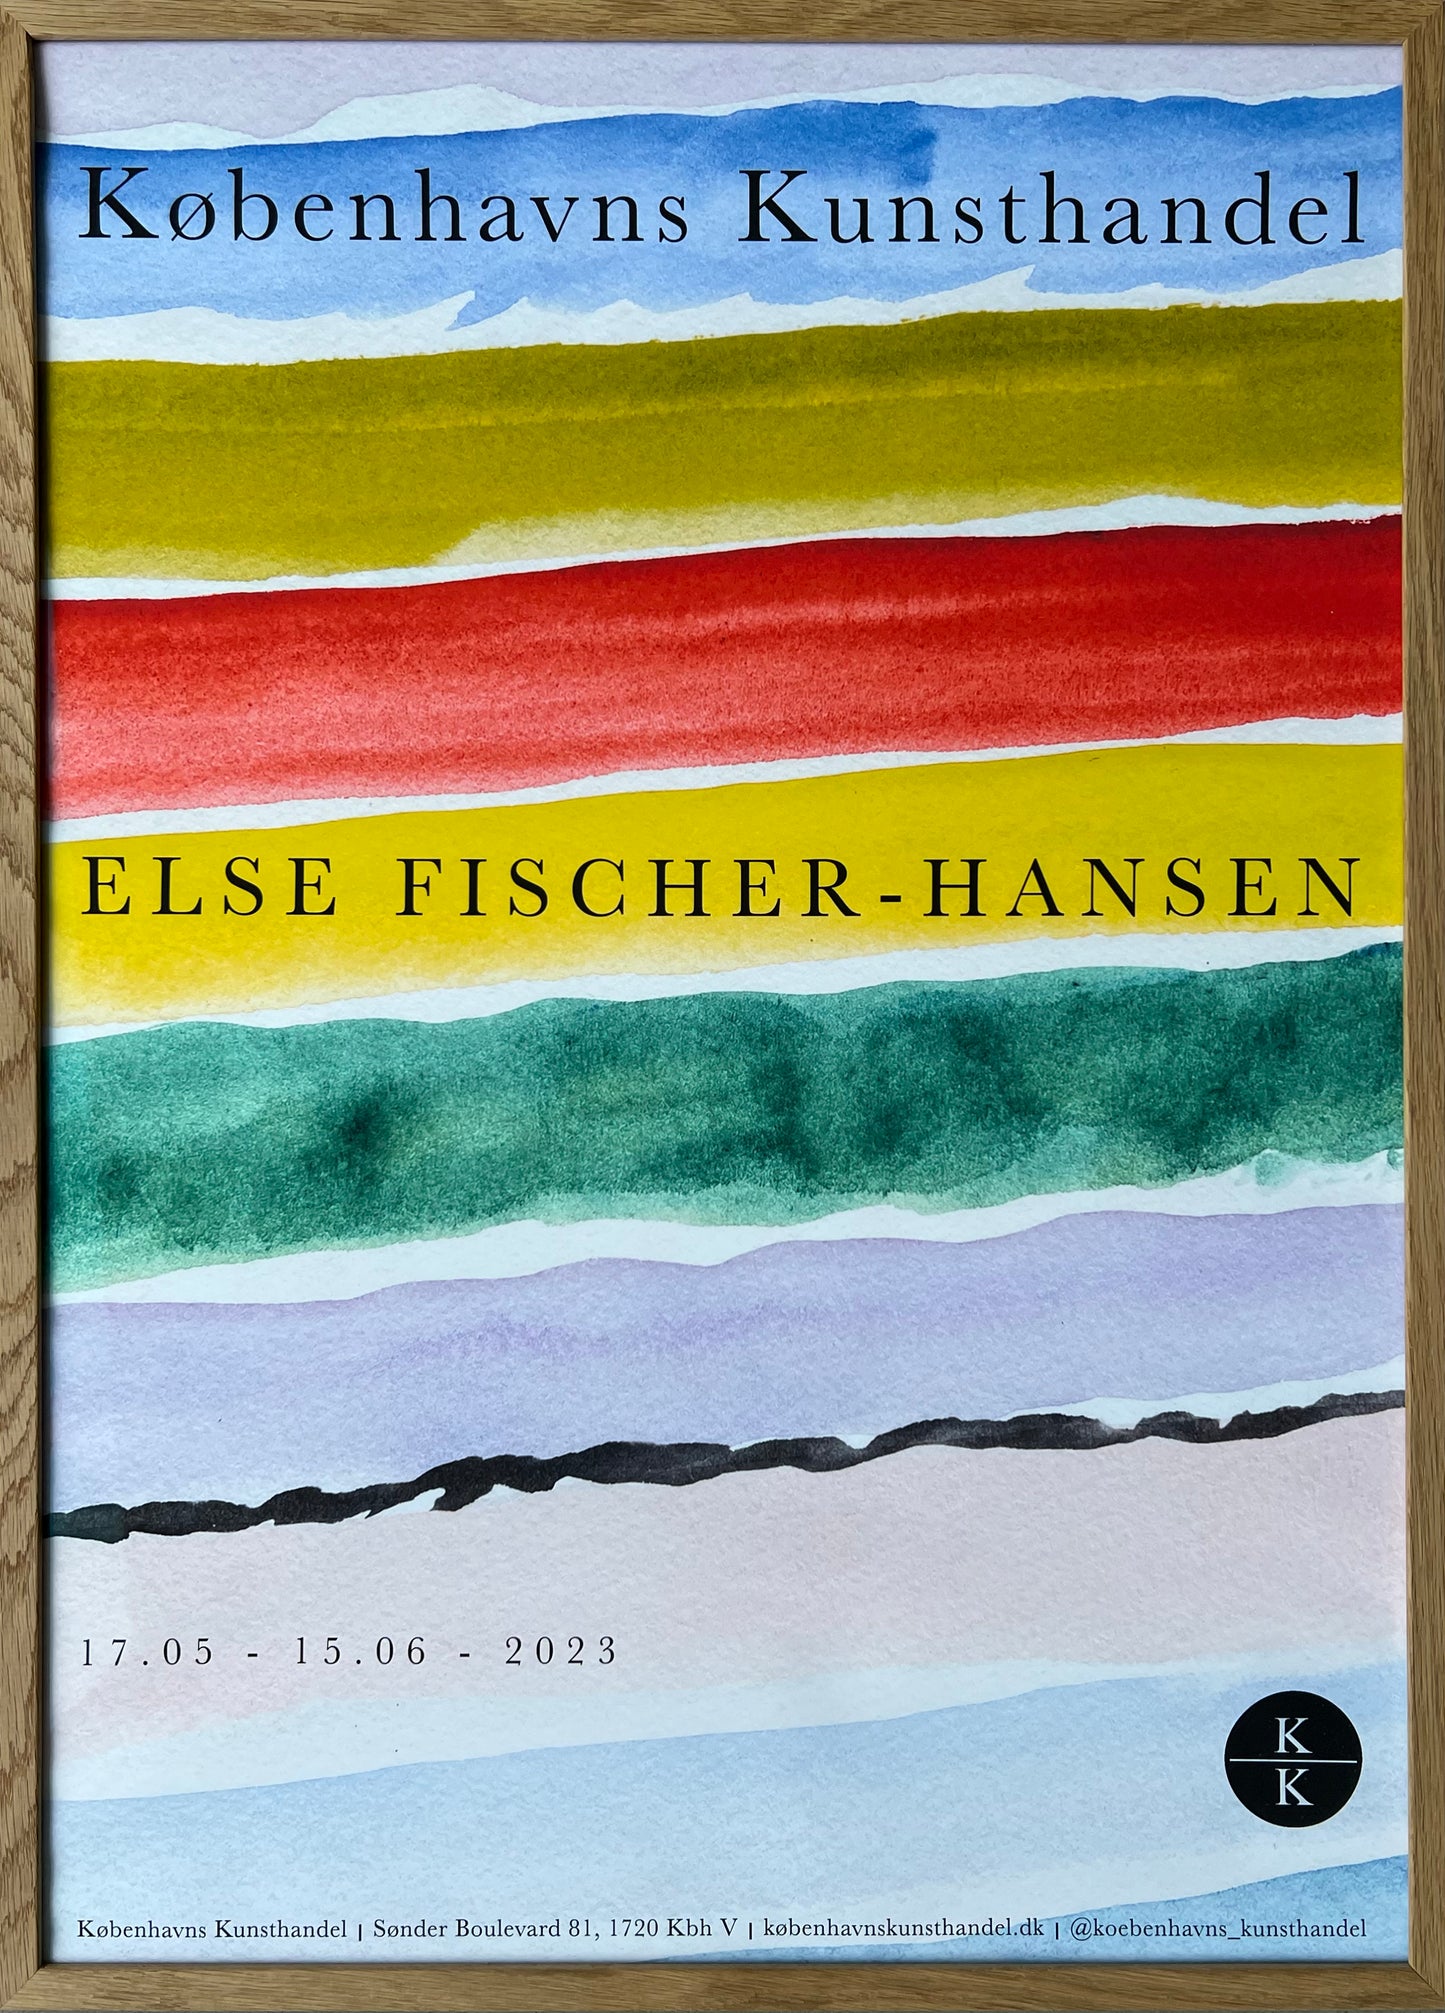 Else Fischer-Hansen. Exhibition poster, 2023